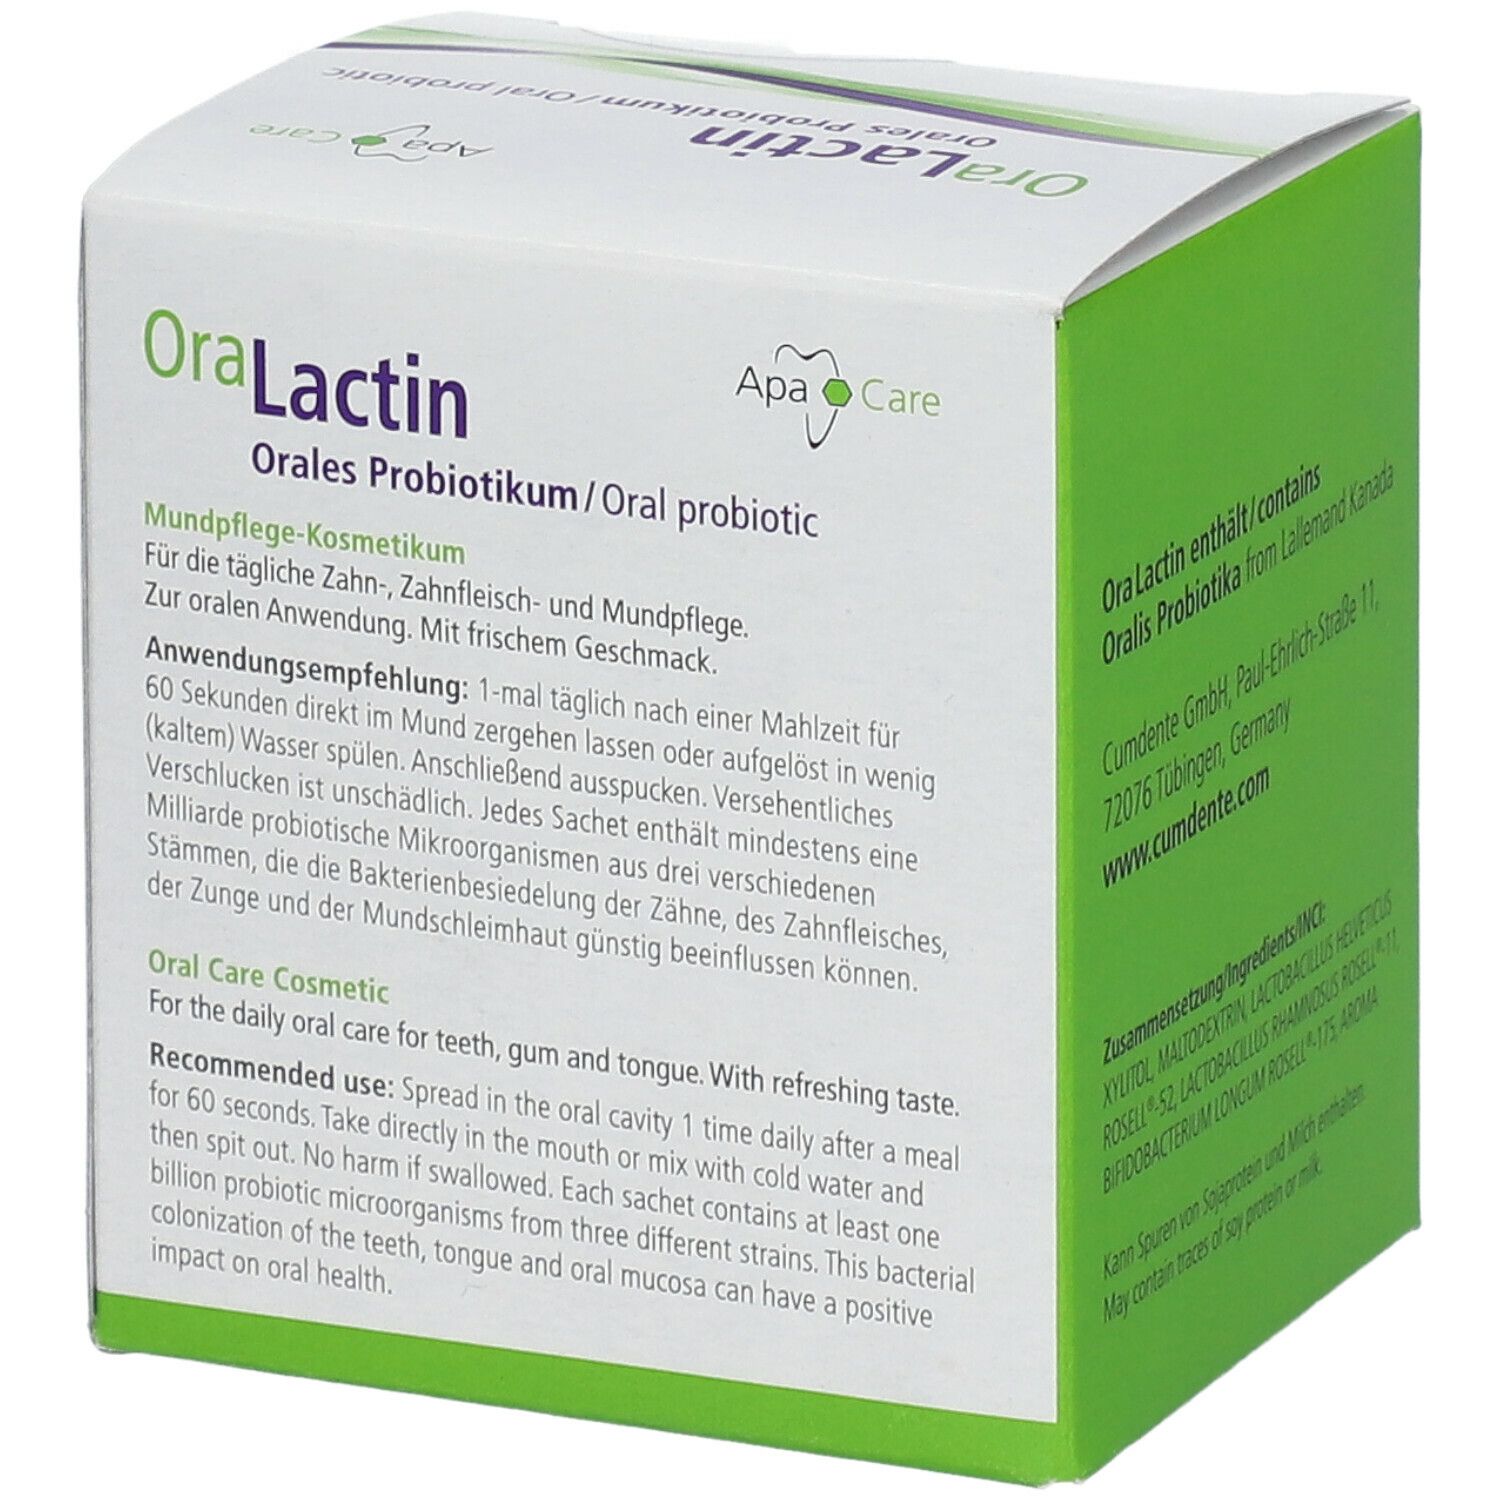 OraLactin® Orales Probiotikum